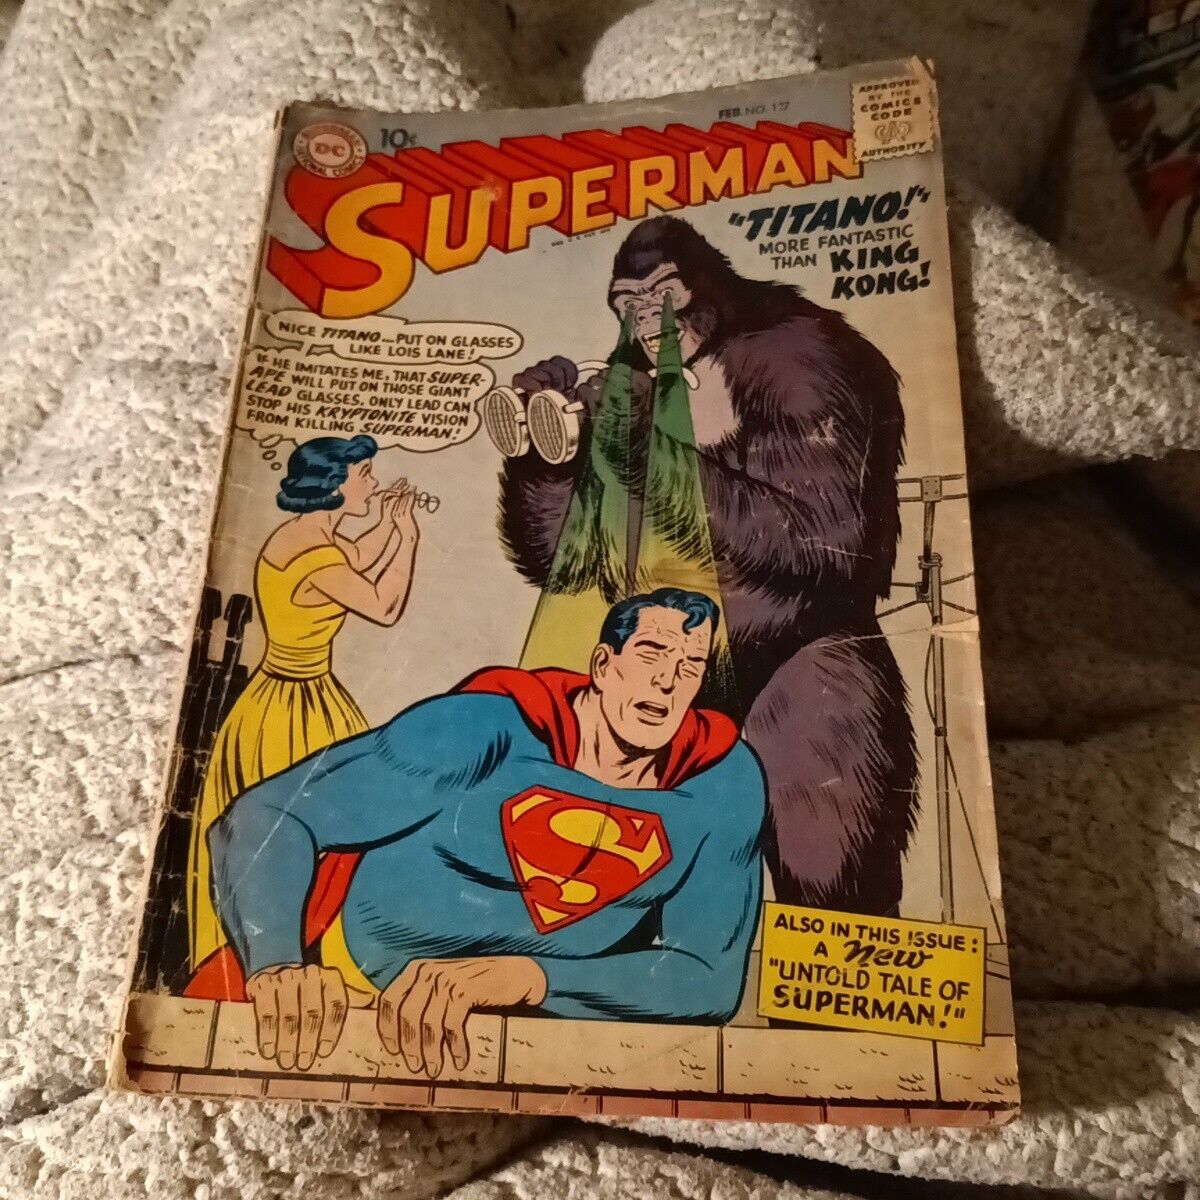 Superman #127 DC comics 1959 1st appearance Titano more fantastic then King Kong